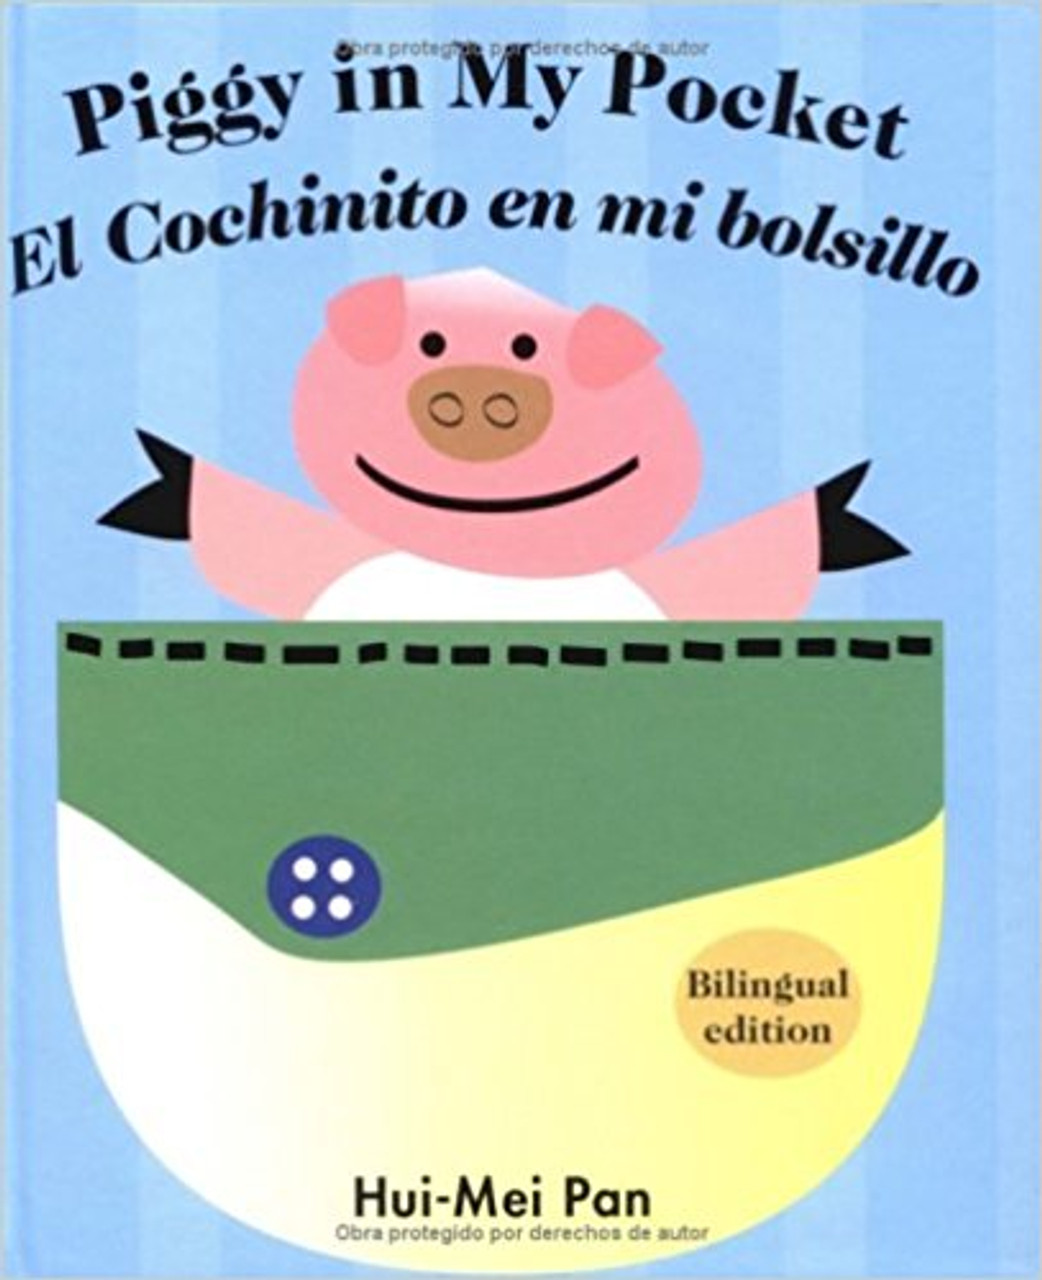 El Cochinito en Mi Bolsillo by Hiu-Mei Pan